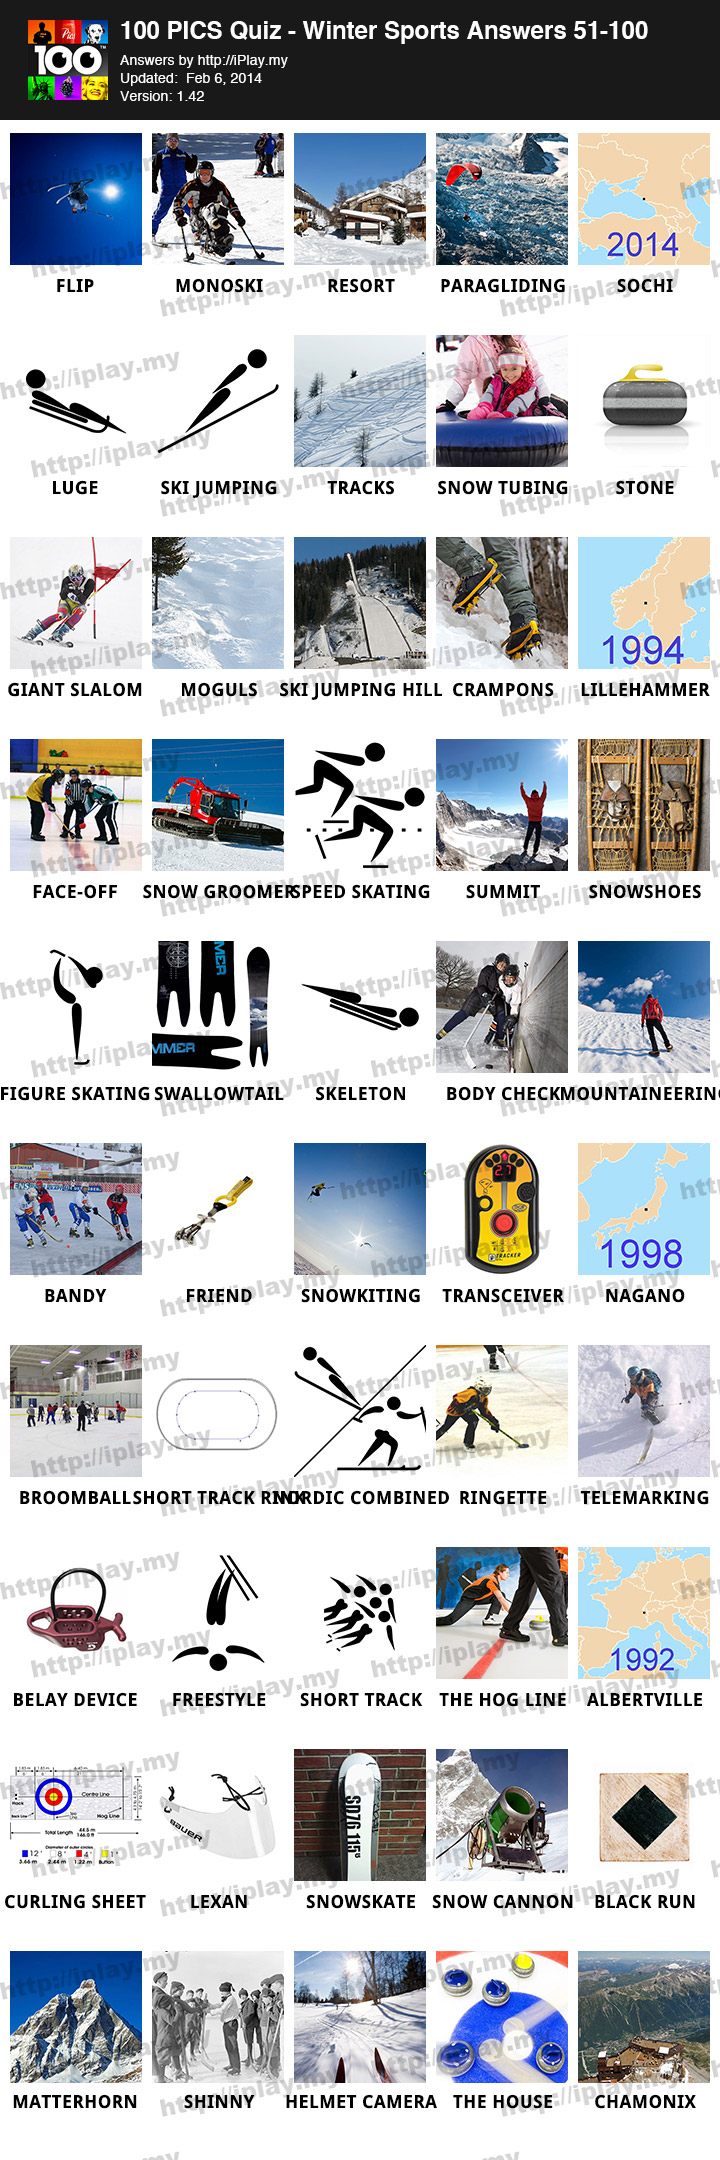 100-Pics-Quiz-Winter-Sports-Answers-51-100